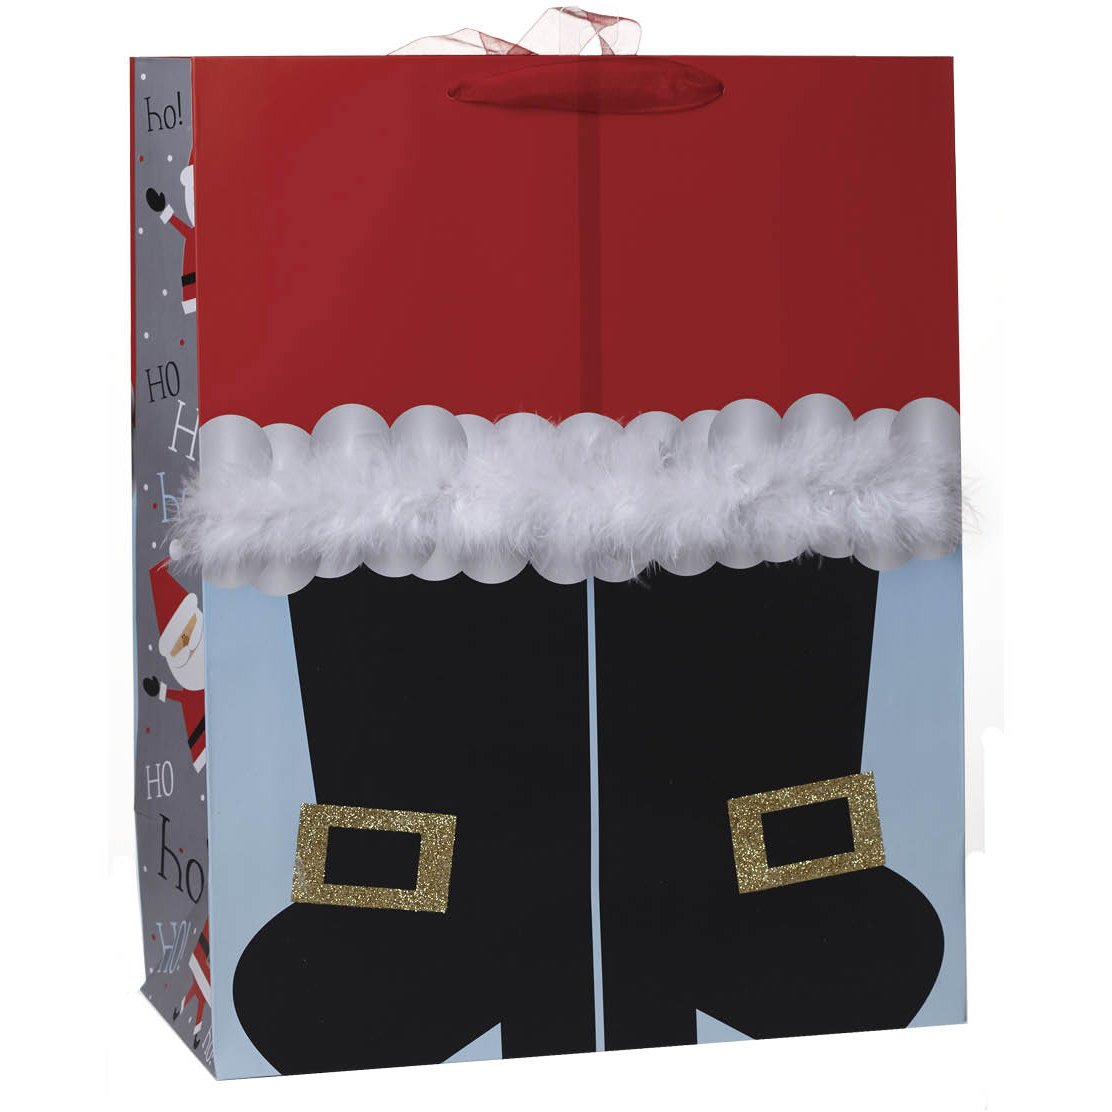 Large Jumbo Christmas Gift Bags with Glitter & Boa, Santa's Boots